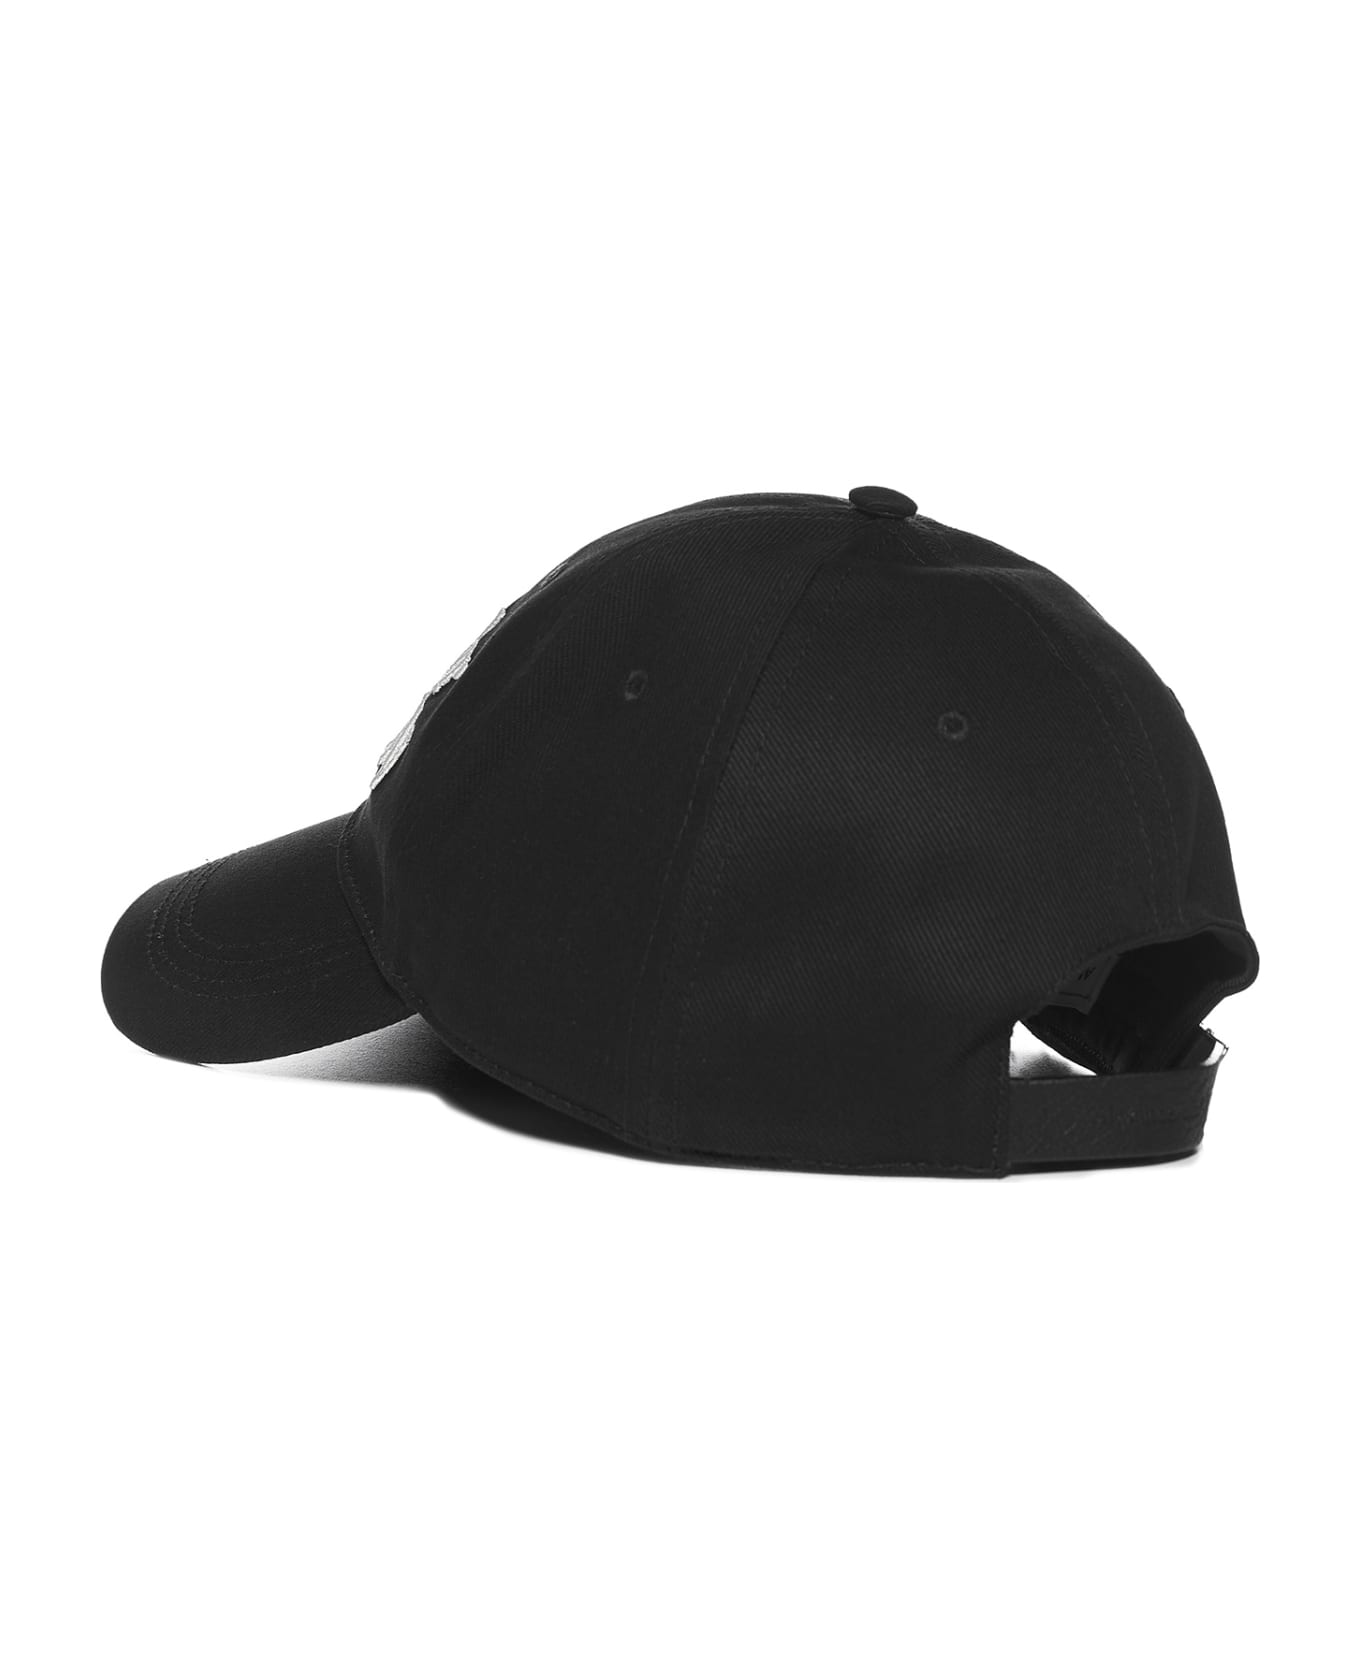 Alexander McQueen Stacked Hat - Black/ivory